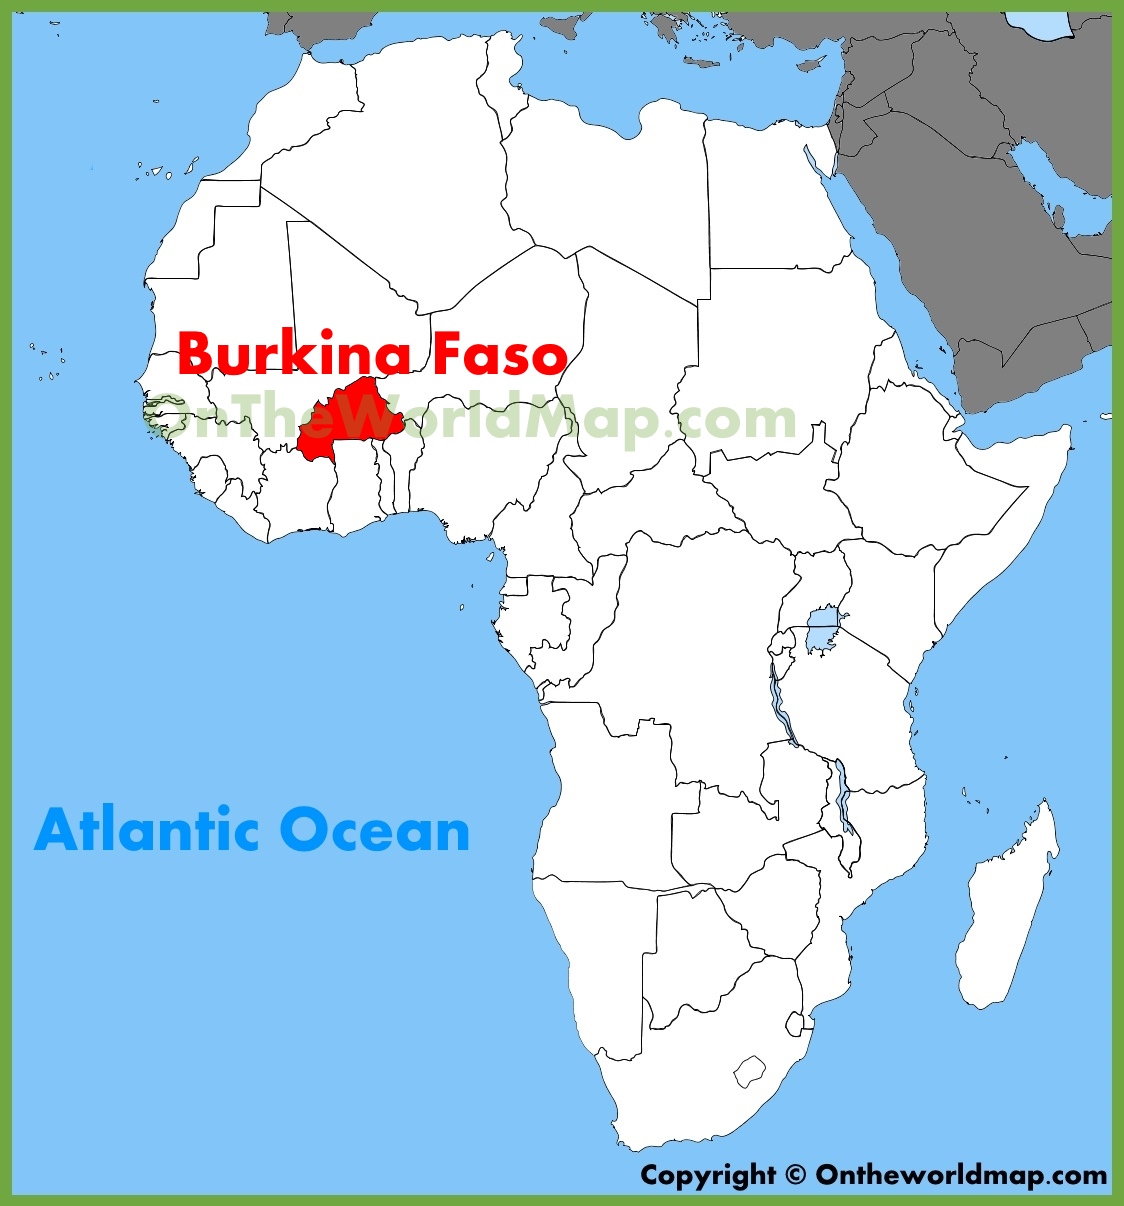 burkina-faso-location-on-the-africa-map.jpg